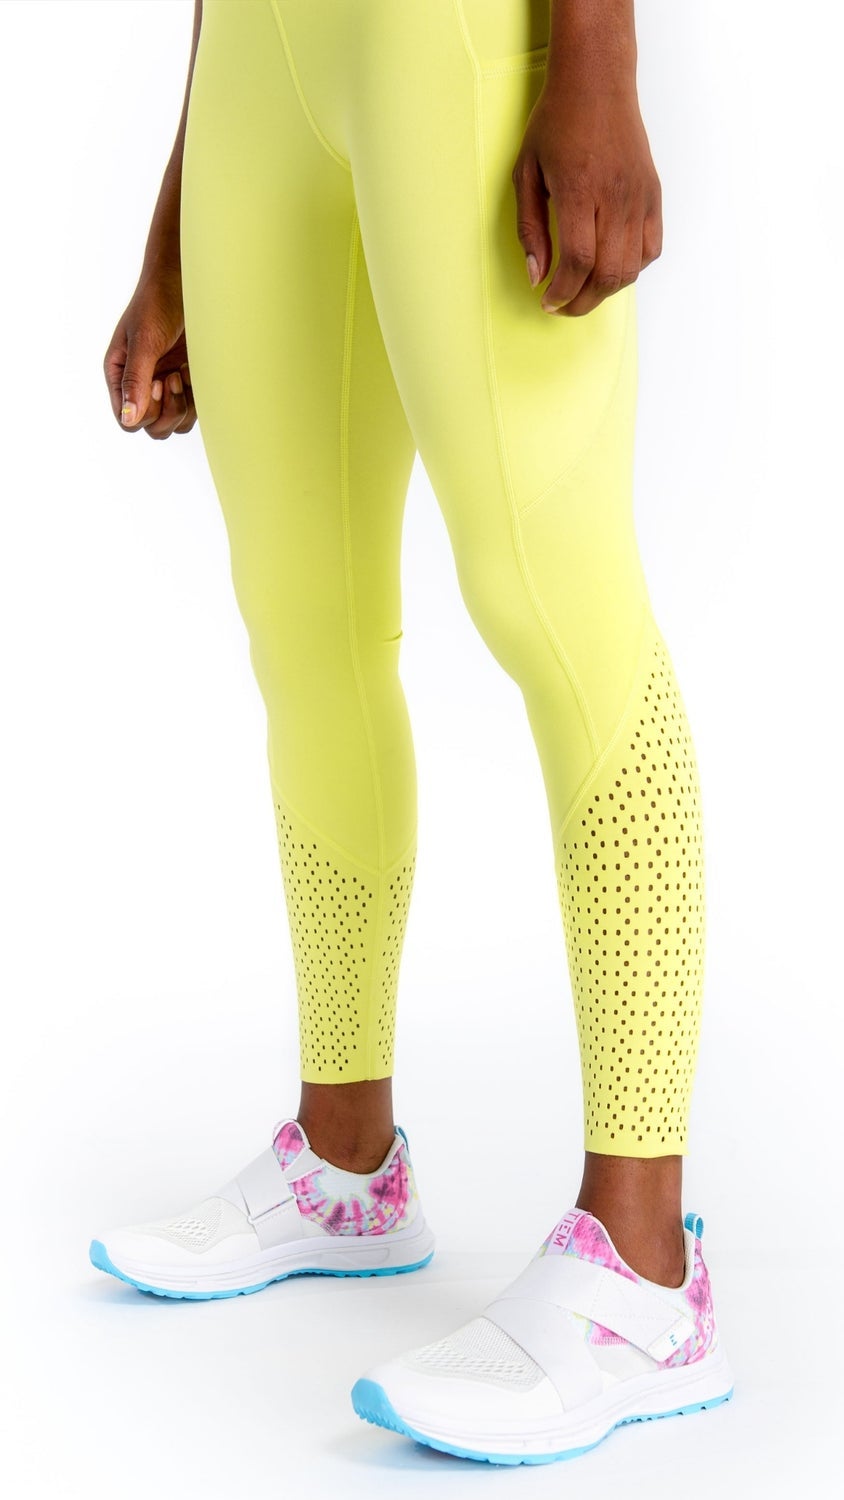 model wearing the leggings in bright yellow